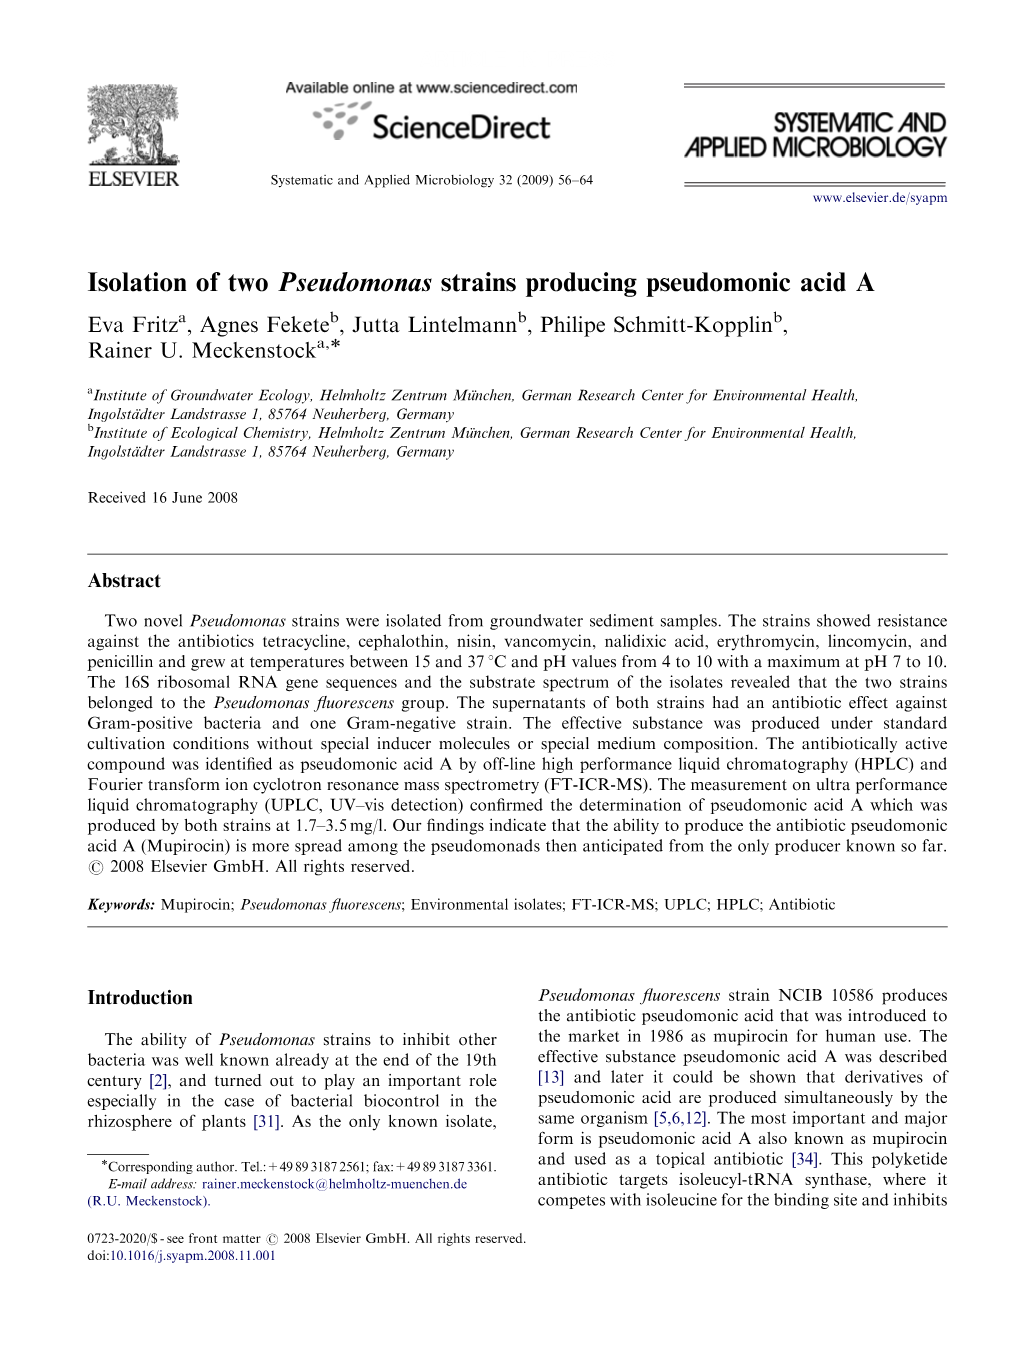 Isolation of Two Pseudomonas Strains Producing Pseudomonic Acid a Eva Fritza, Agnes Feketeb, Jutta Lintelmannb, Philipe Schmitt-Kopplinb, Rainer U